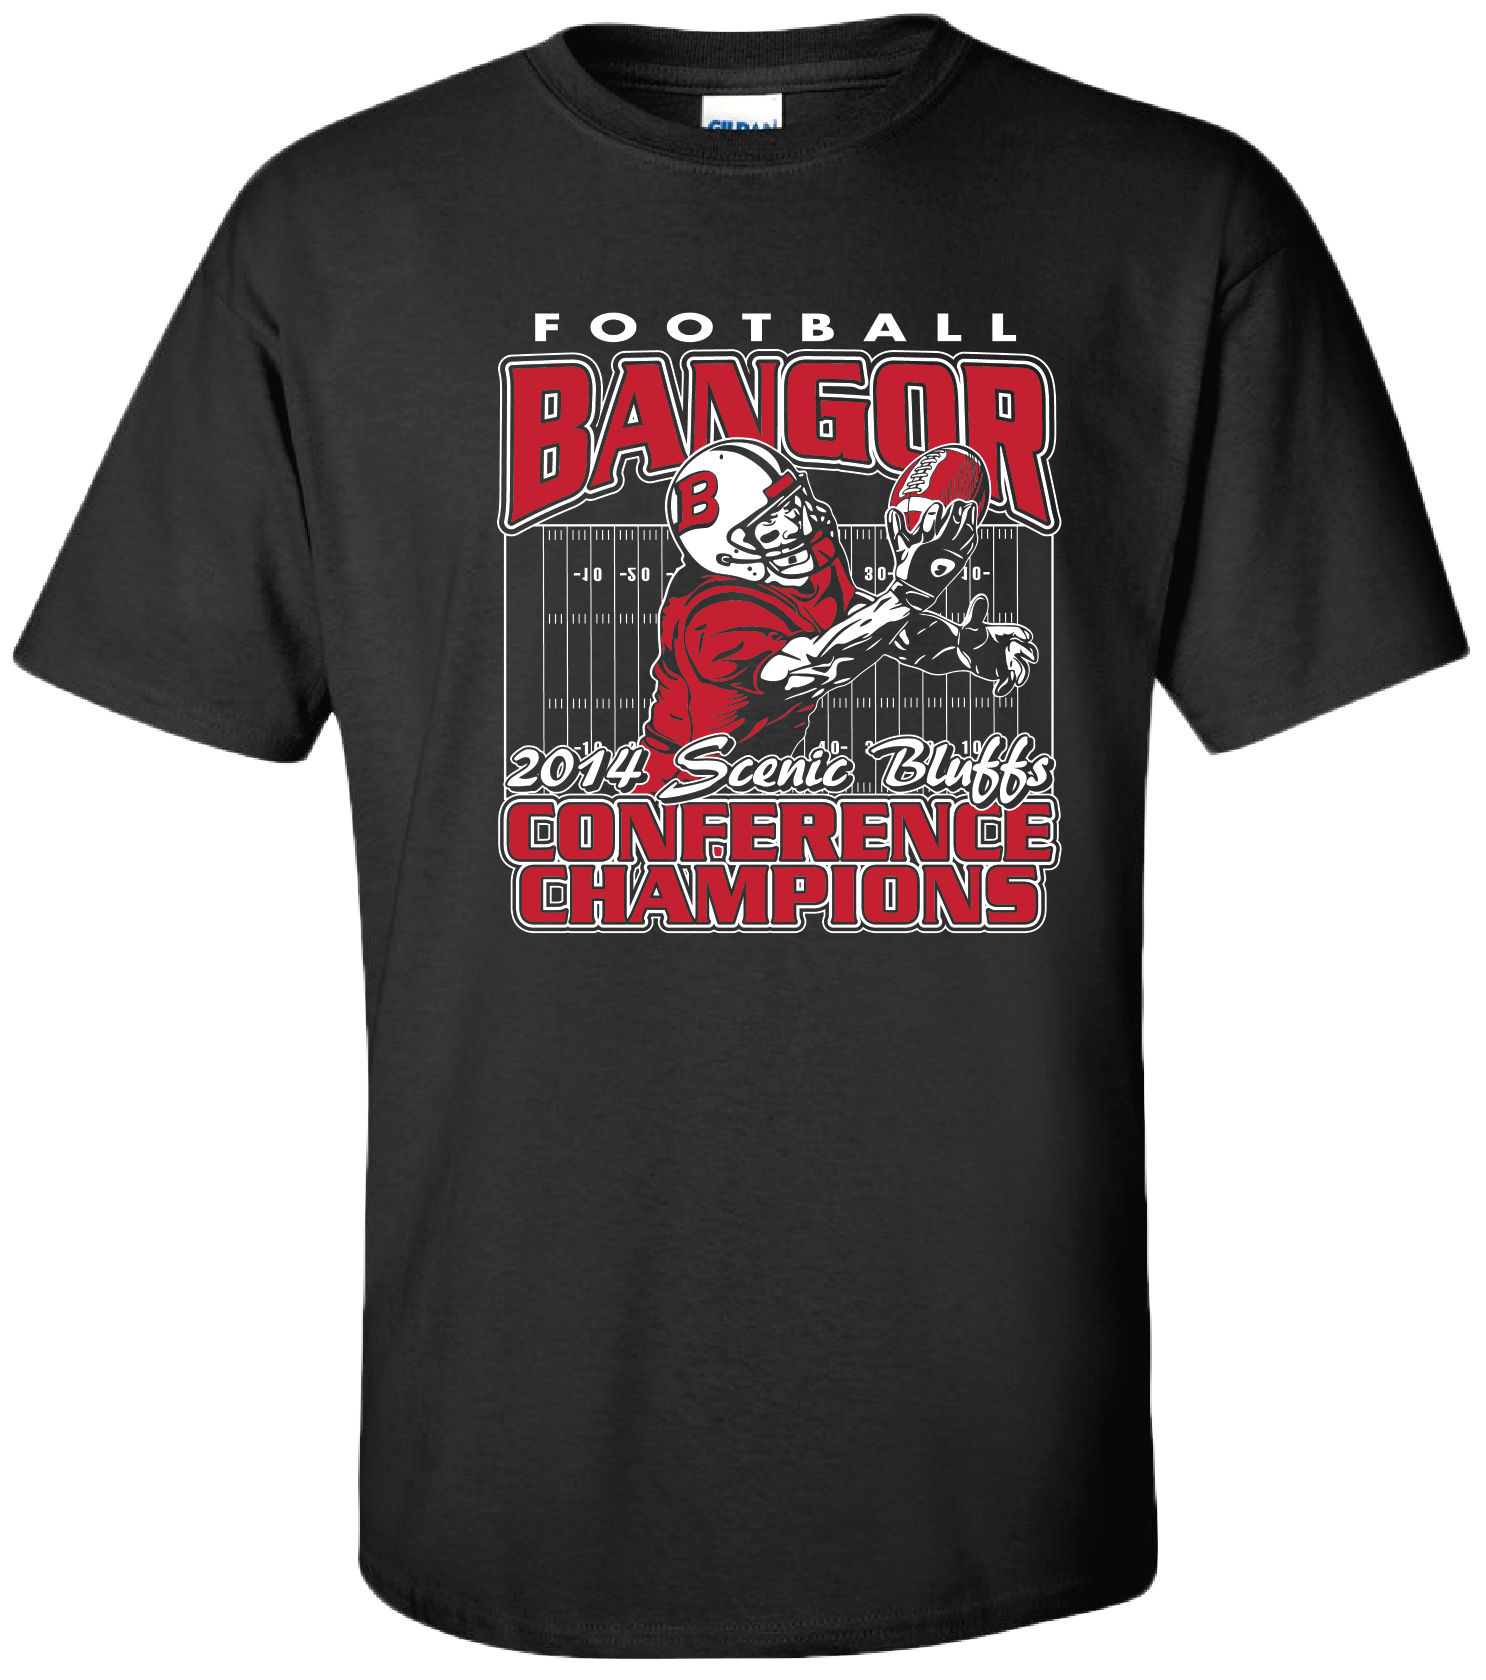 Bangor-High-School-Football-Conference-Champion-2014-02.png